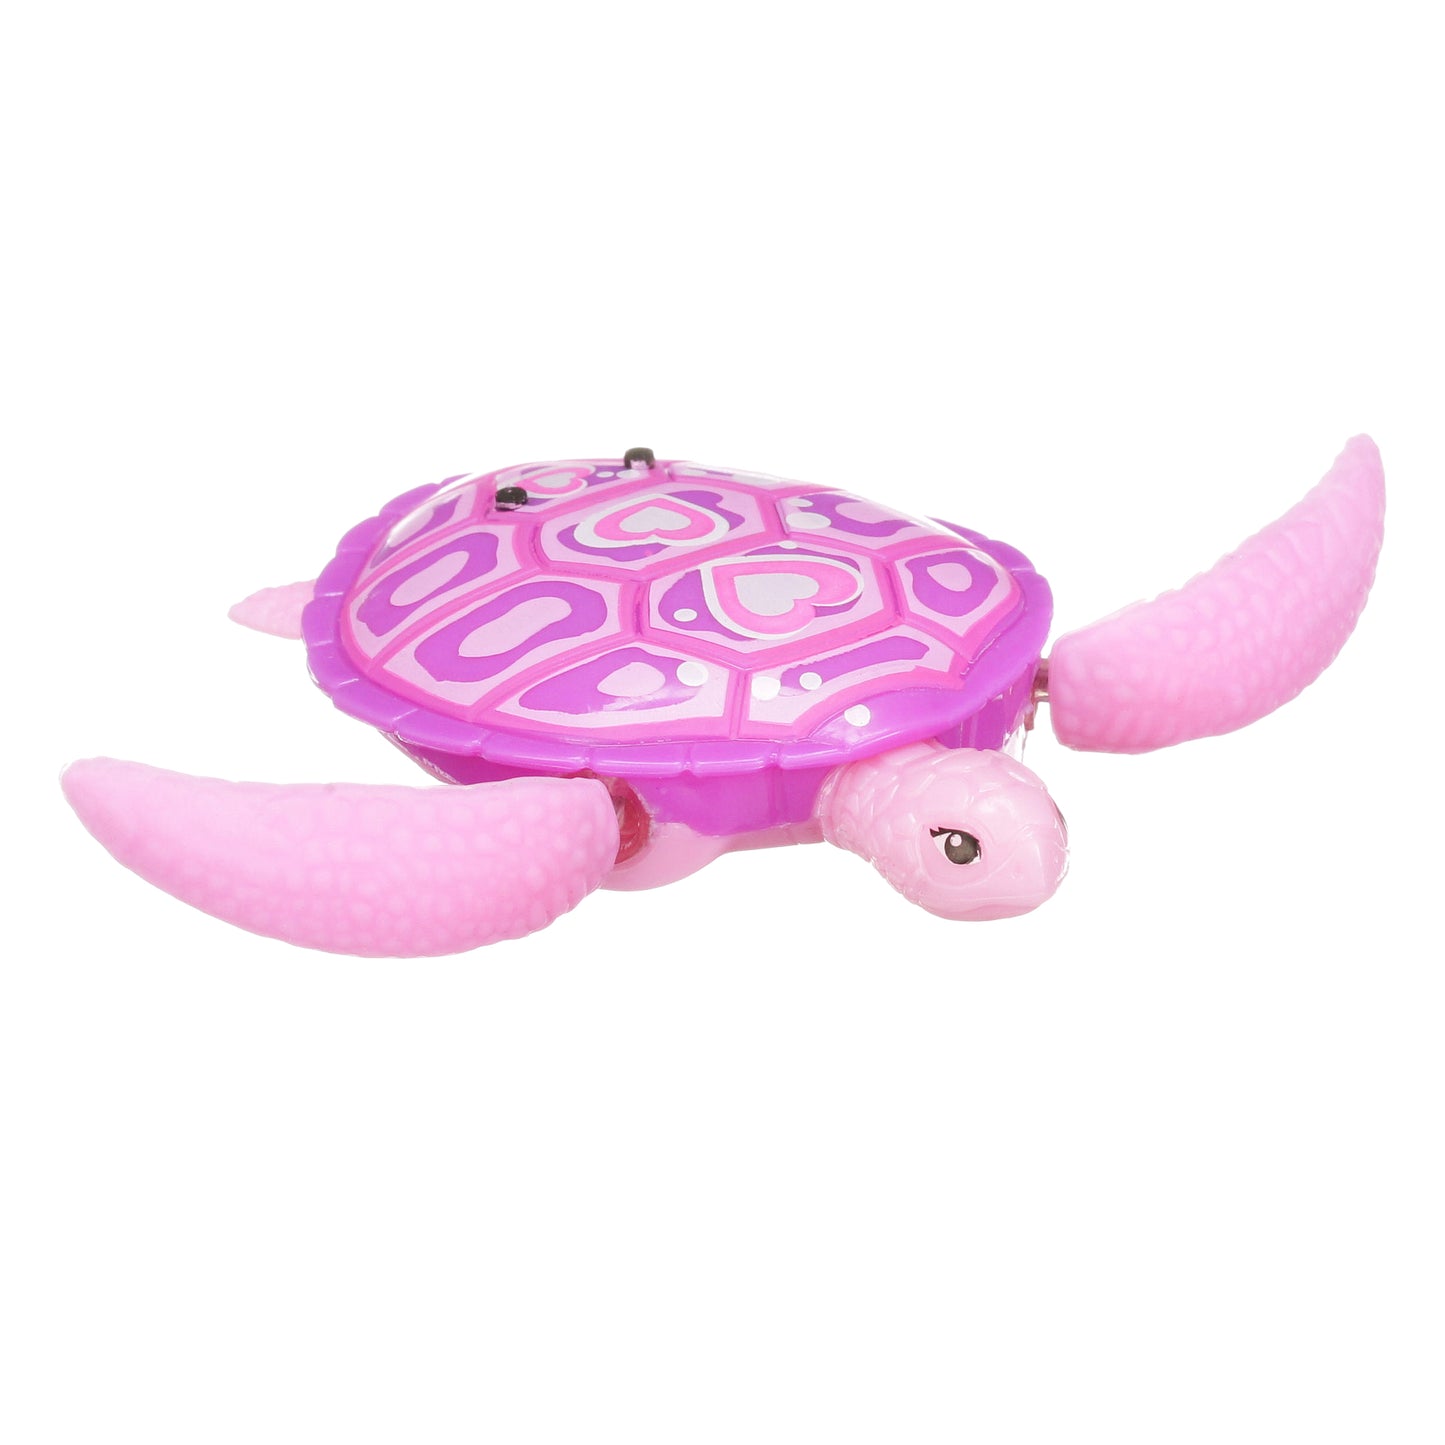 ZURU Pets Alive Robotic Turtle - Kids Pretend Play Walk & Swim Turtle Toy